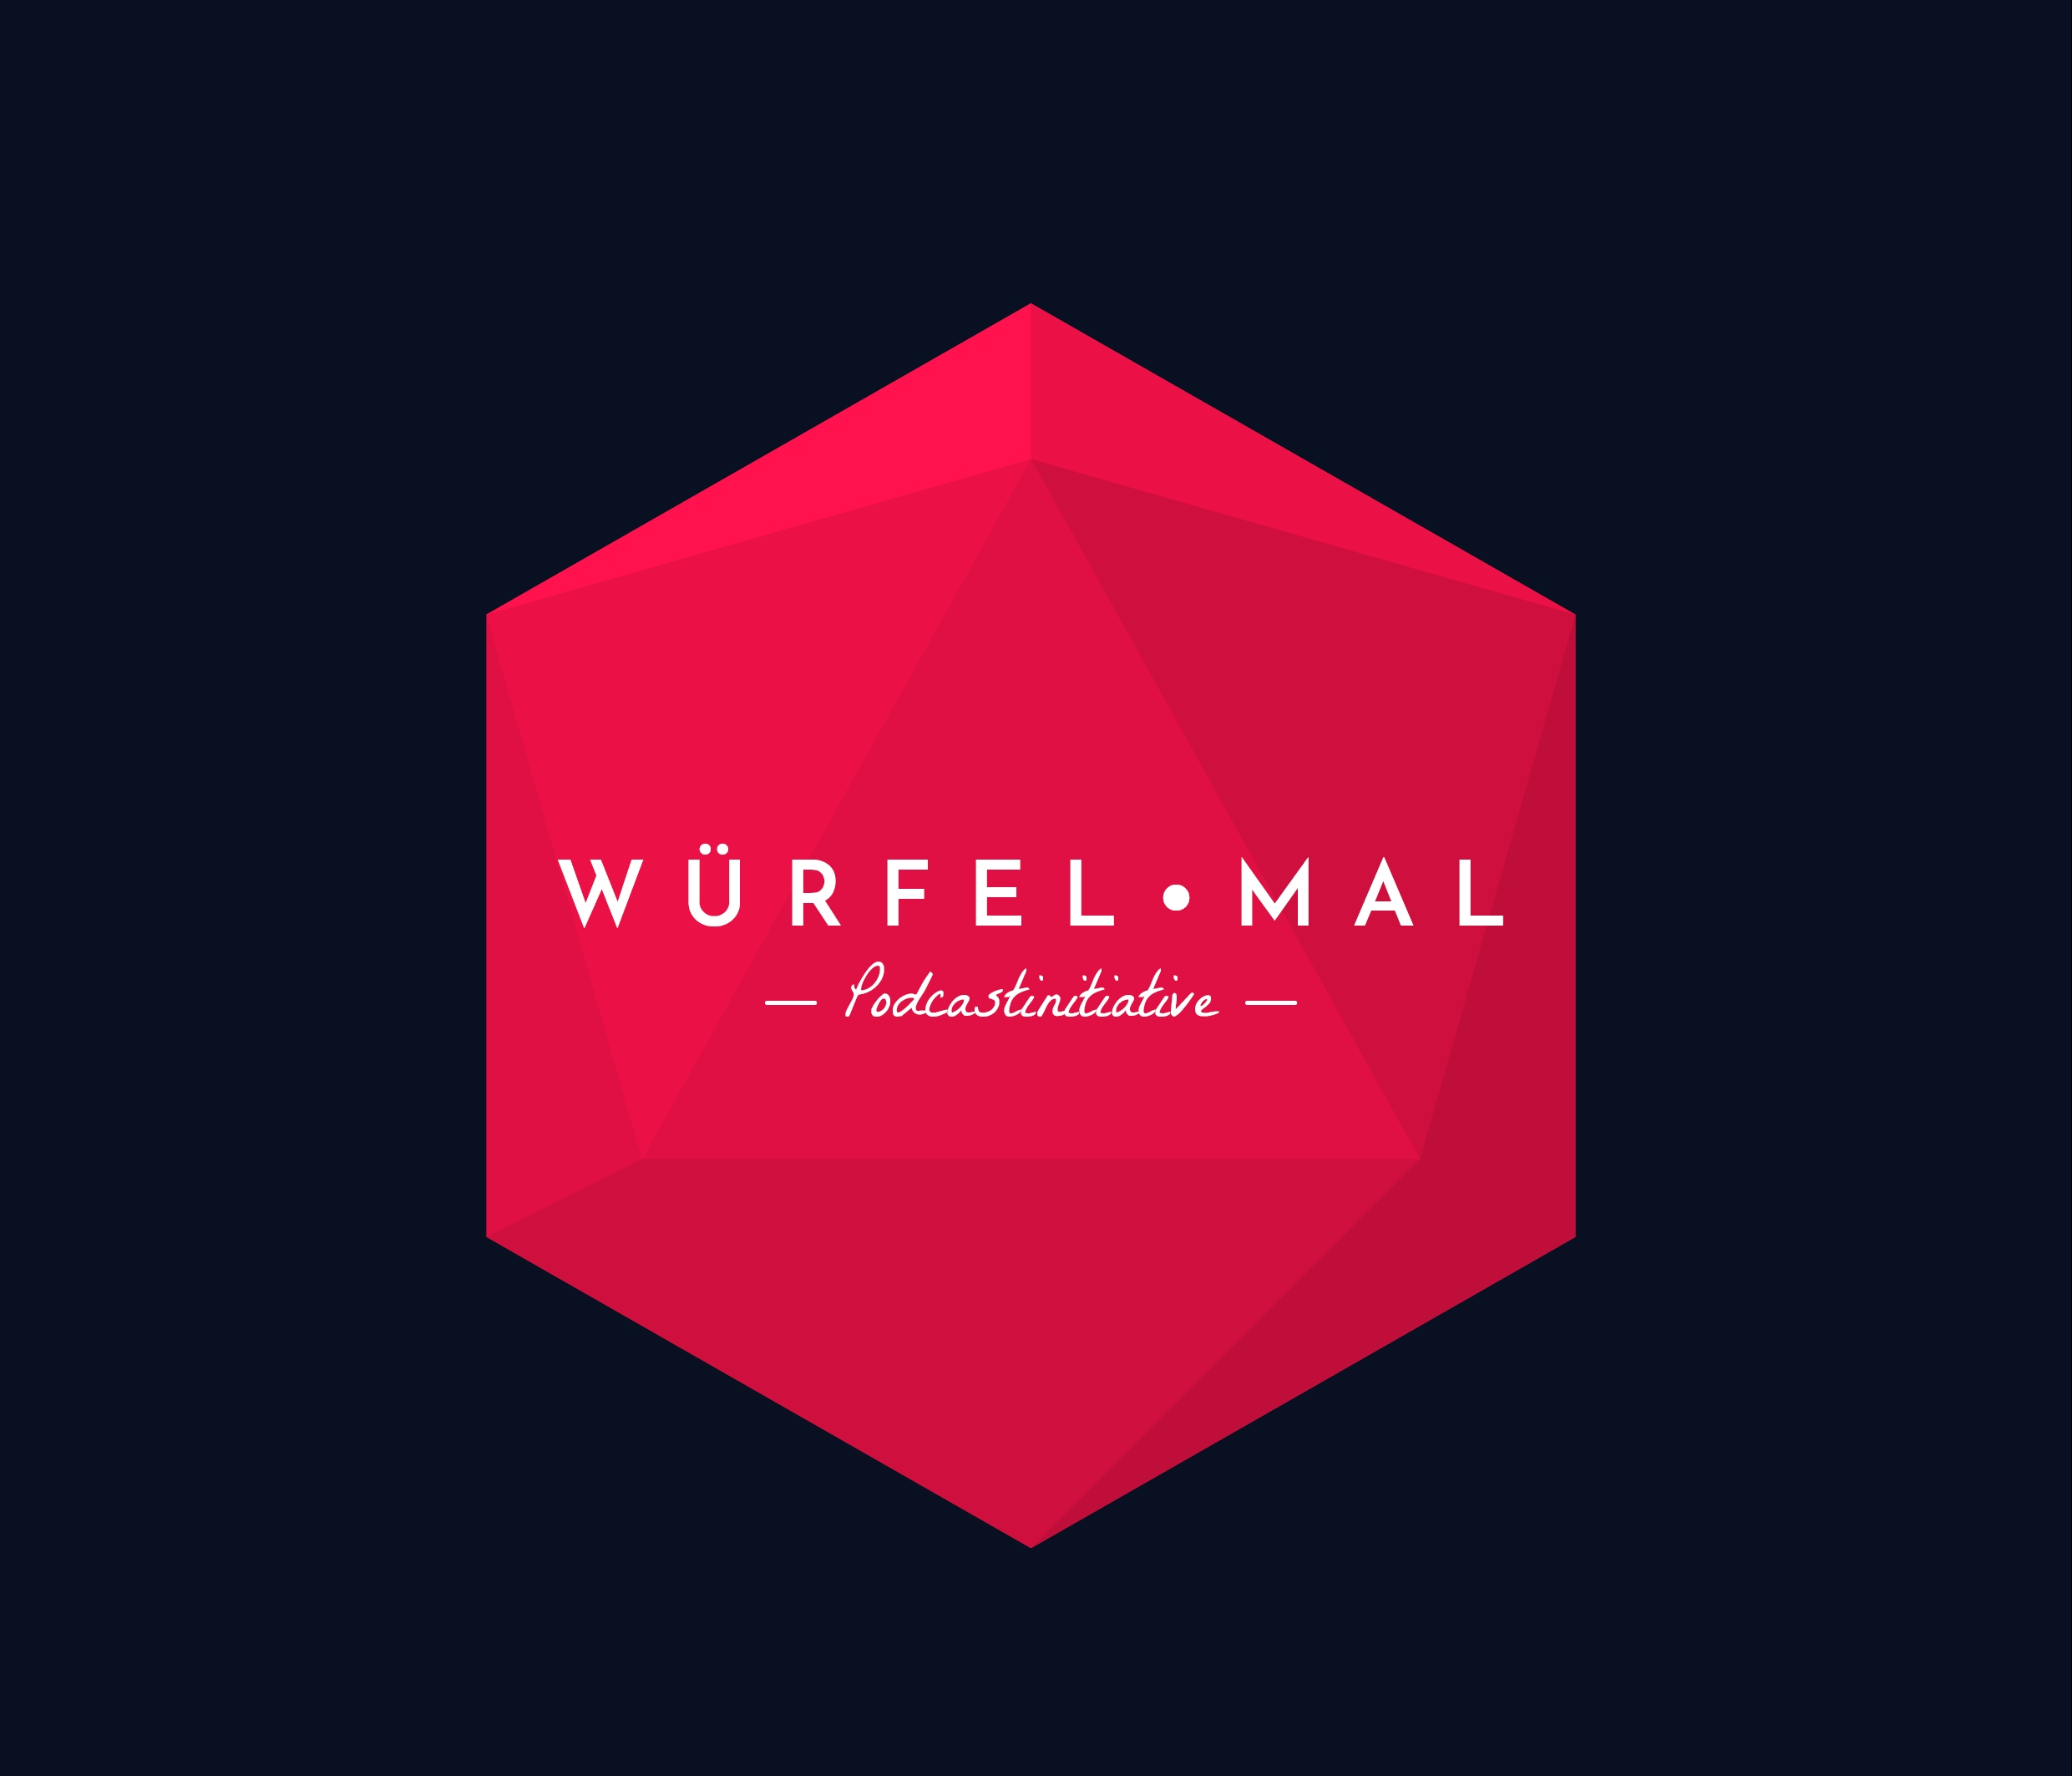 Würfel mal Podcast Logo Design